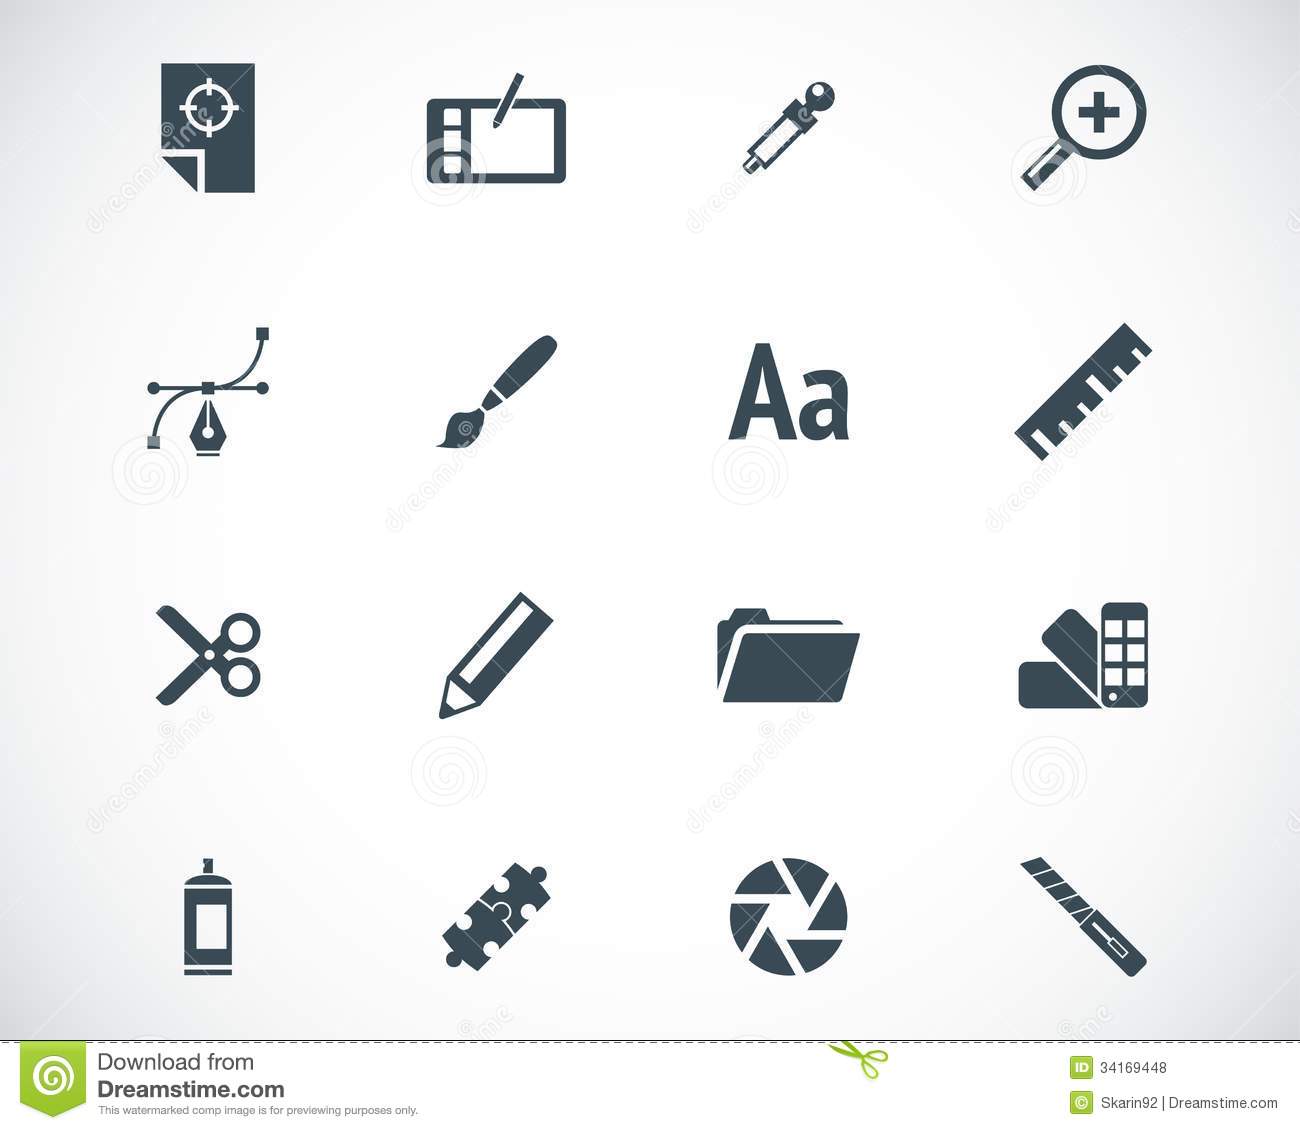 Graphic Design Icons Free